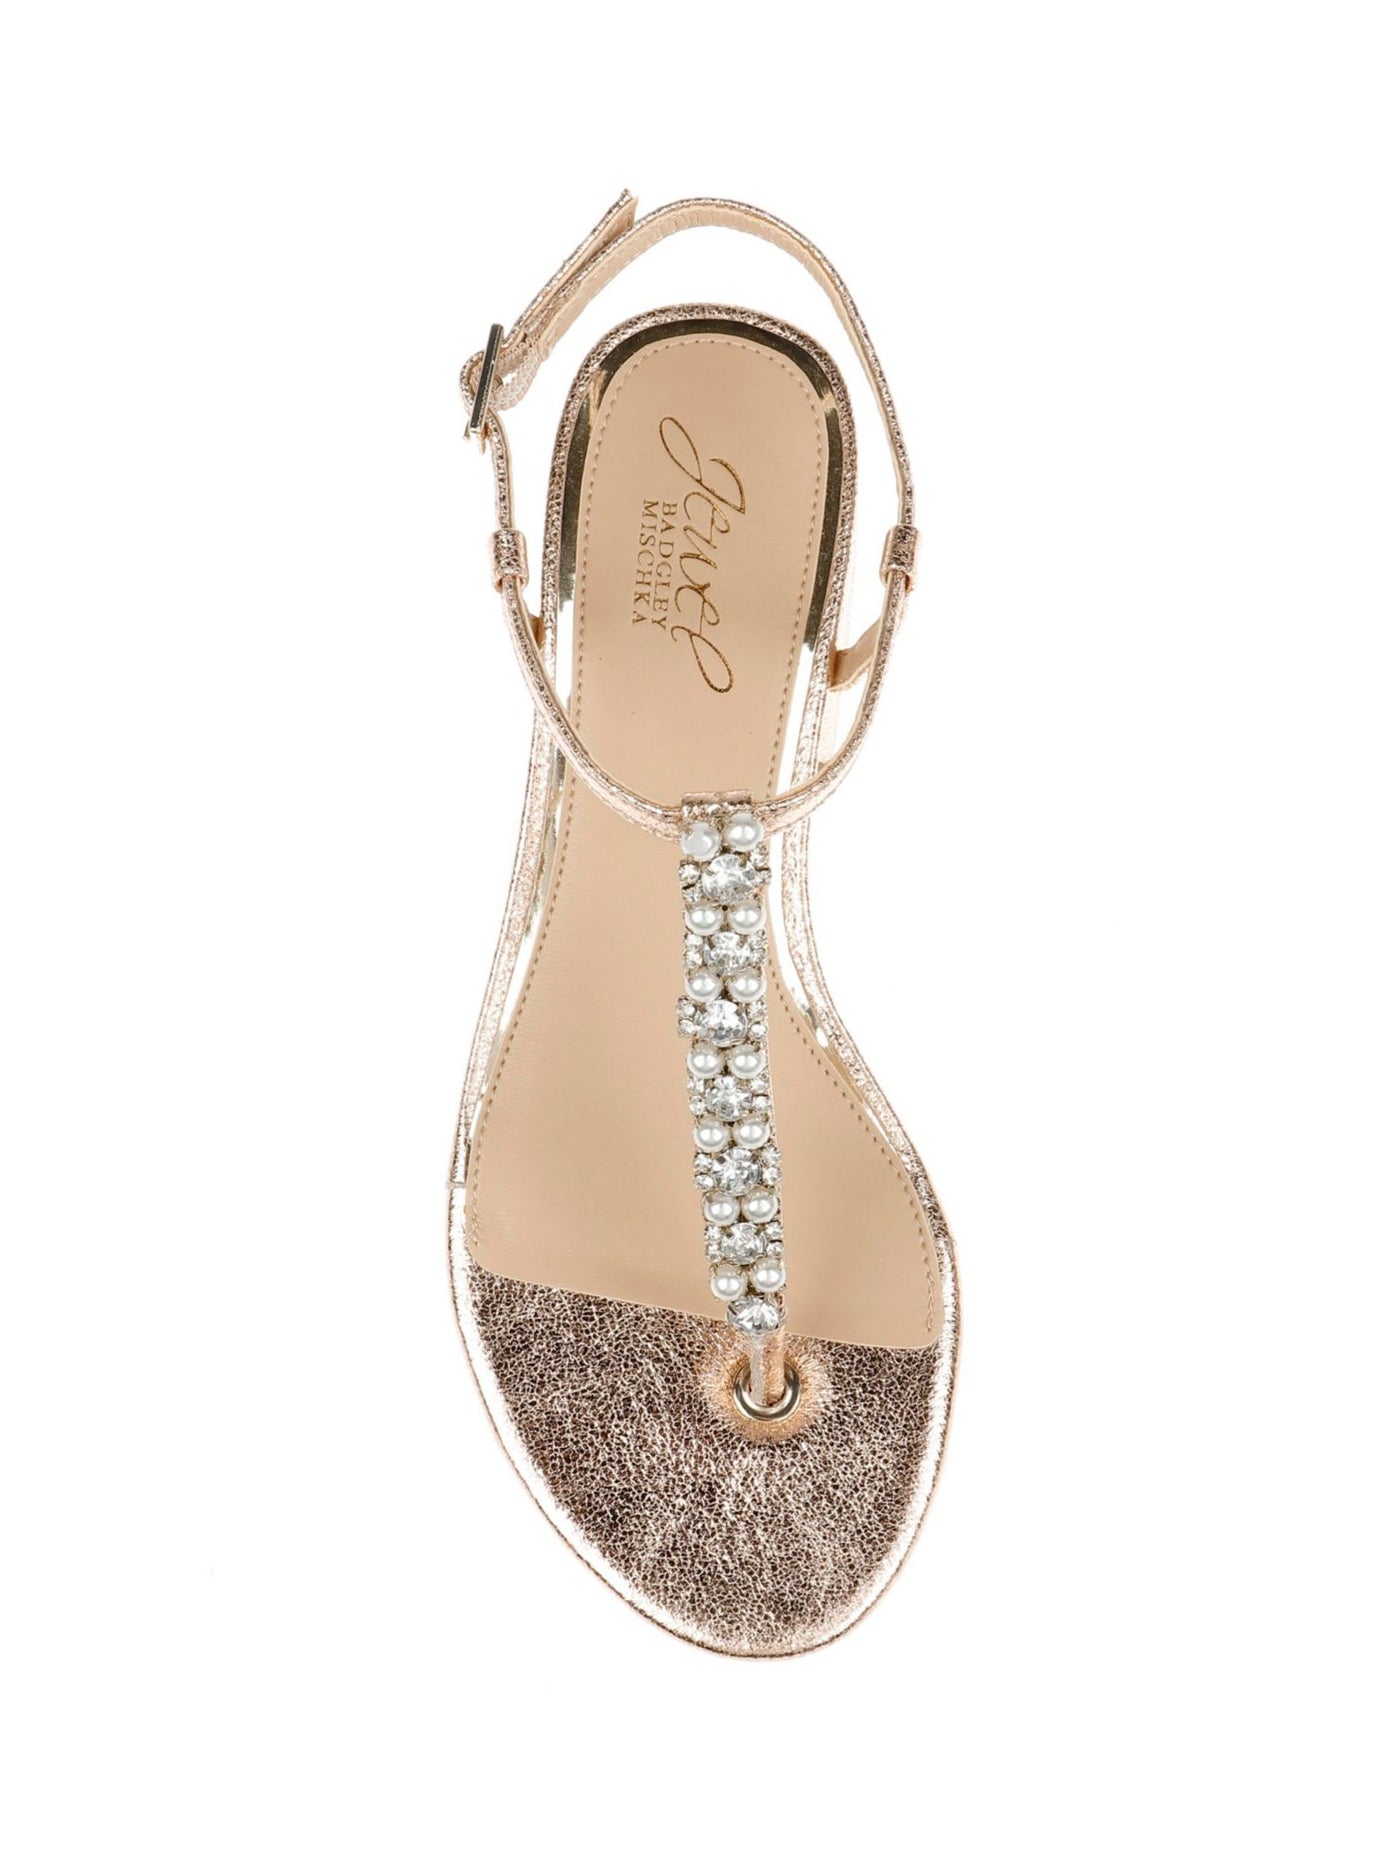 JEWEL BADGLEY MISCHKA Womens Gold Embellished T-Strap Dasha Round Toe Block Heel Buckle Dress Thong Sandals Shoes 9.5 M